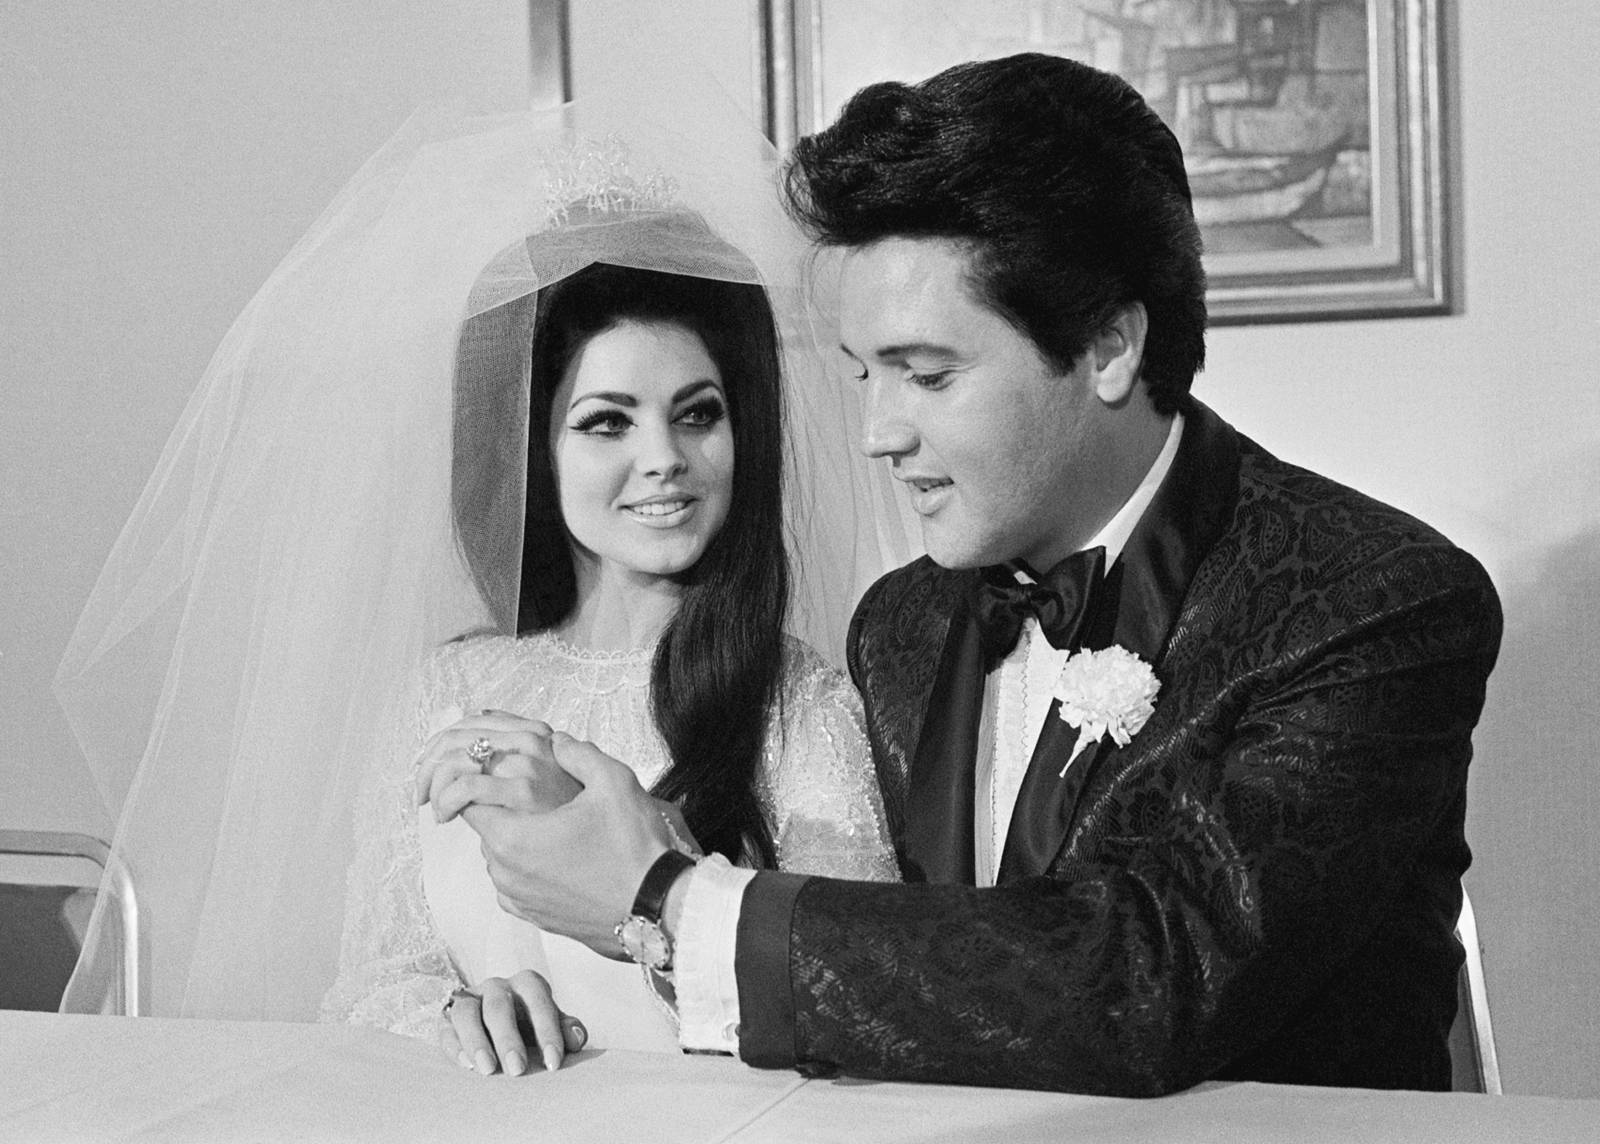 Ślub Elvisa i Priscilli w Las Vegas w 1967 roku (Fot. Getty Images)